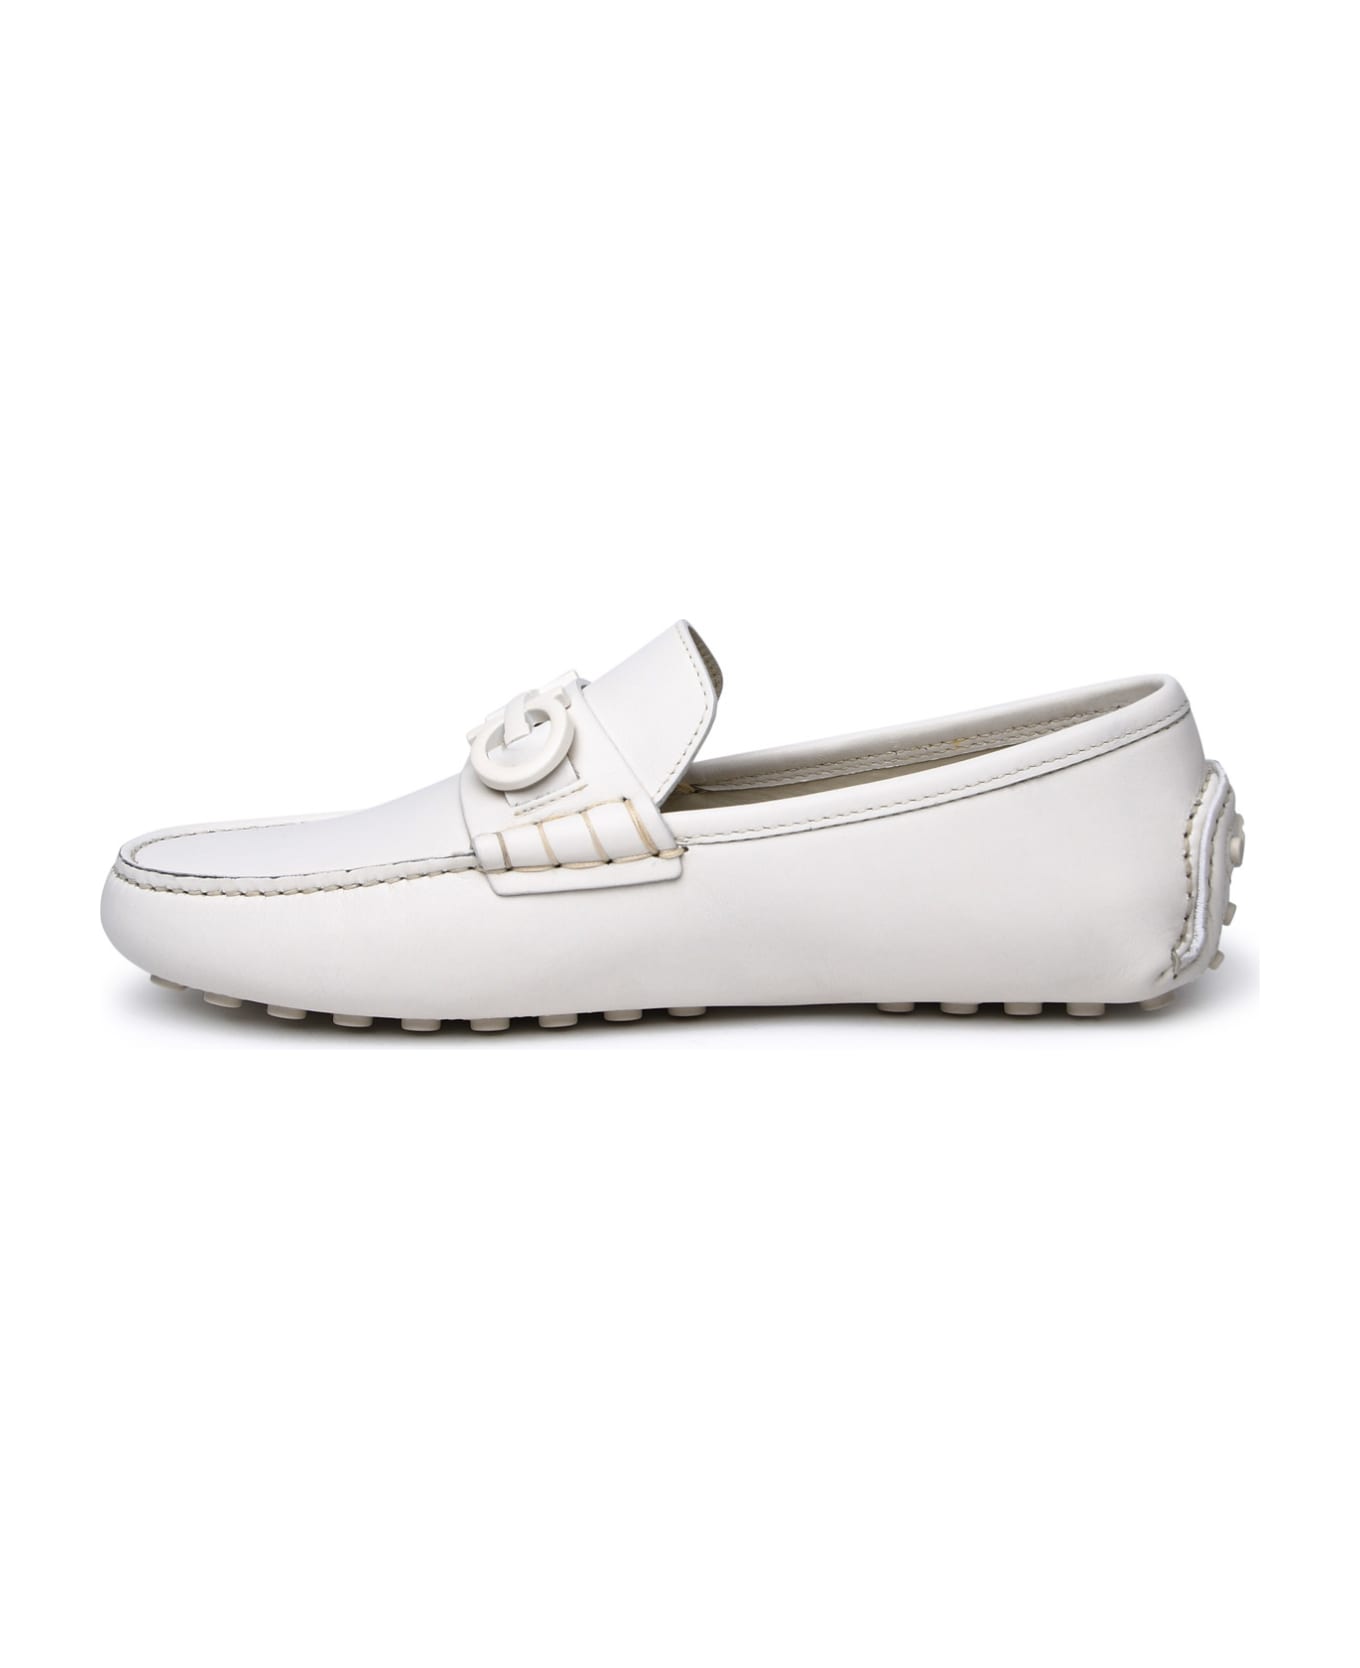 Ferragamo White Leather Loafers - IVORY